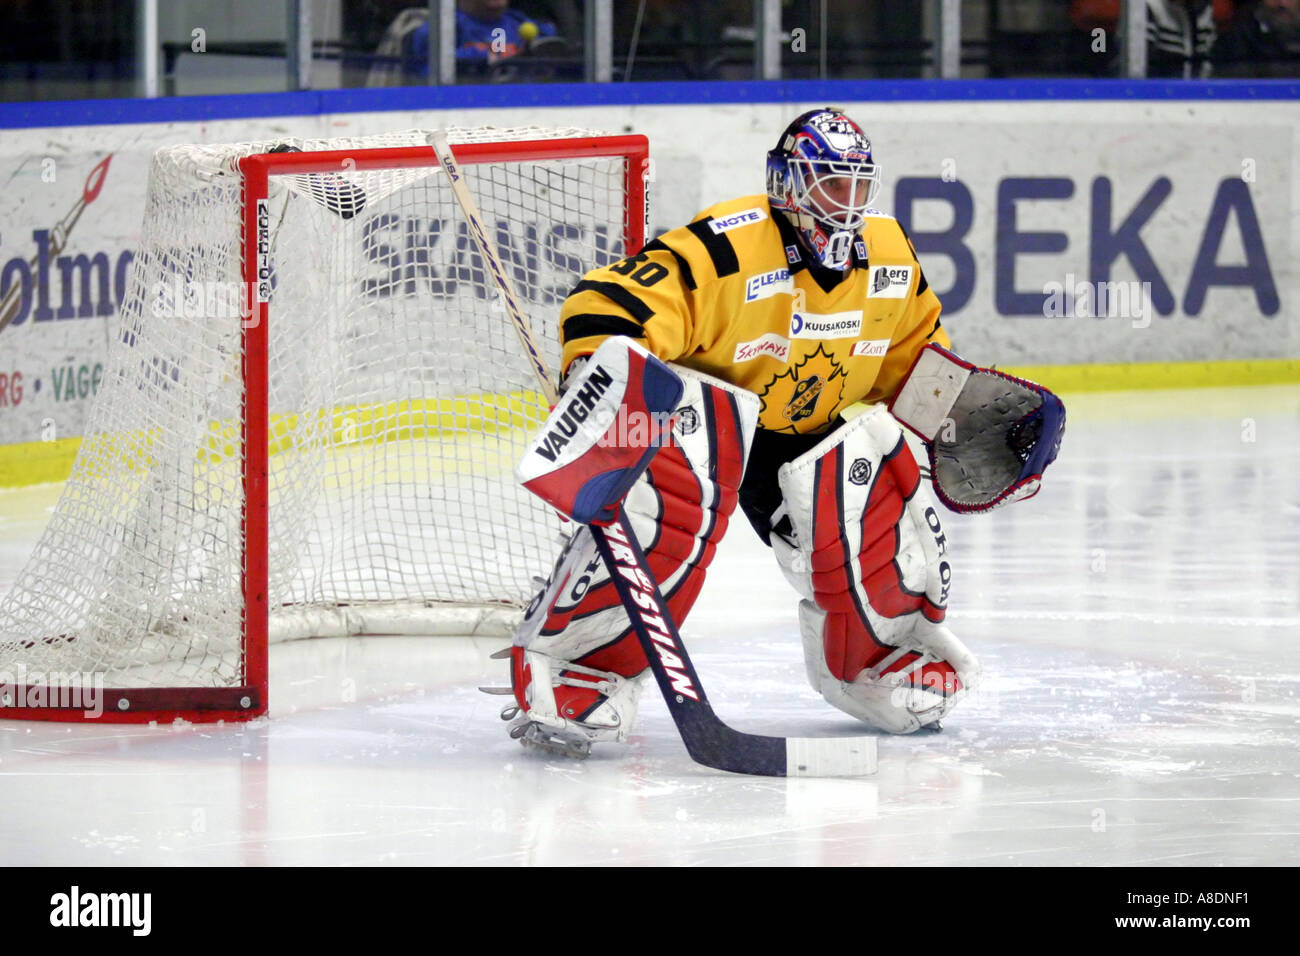 Hockey goalie cut jersey Montreal Boston Chicago Detroit Toronto NY-Rangers